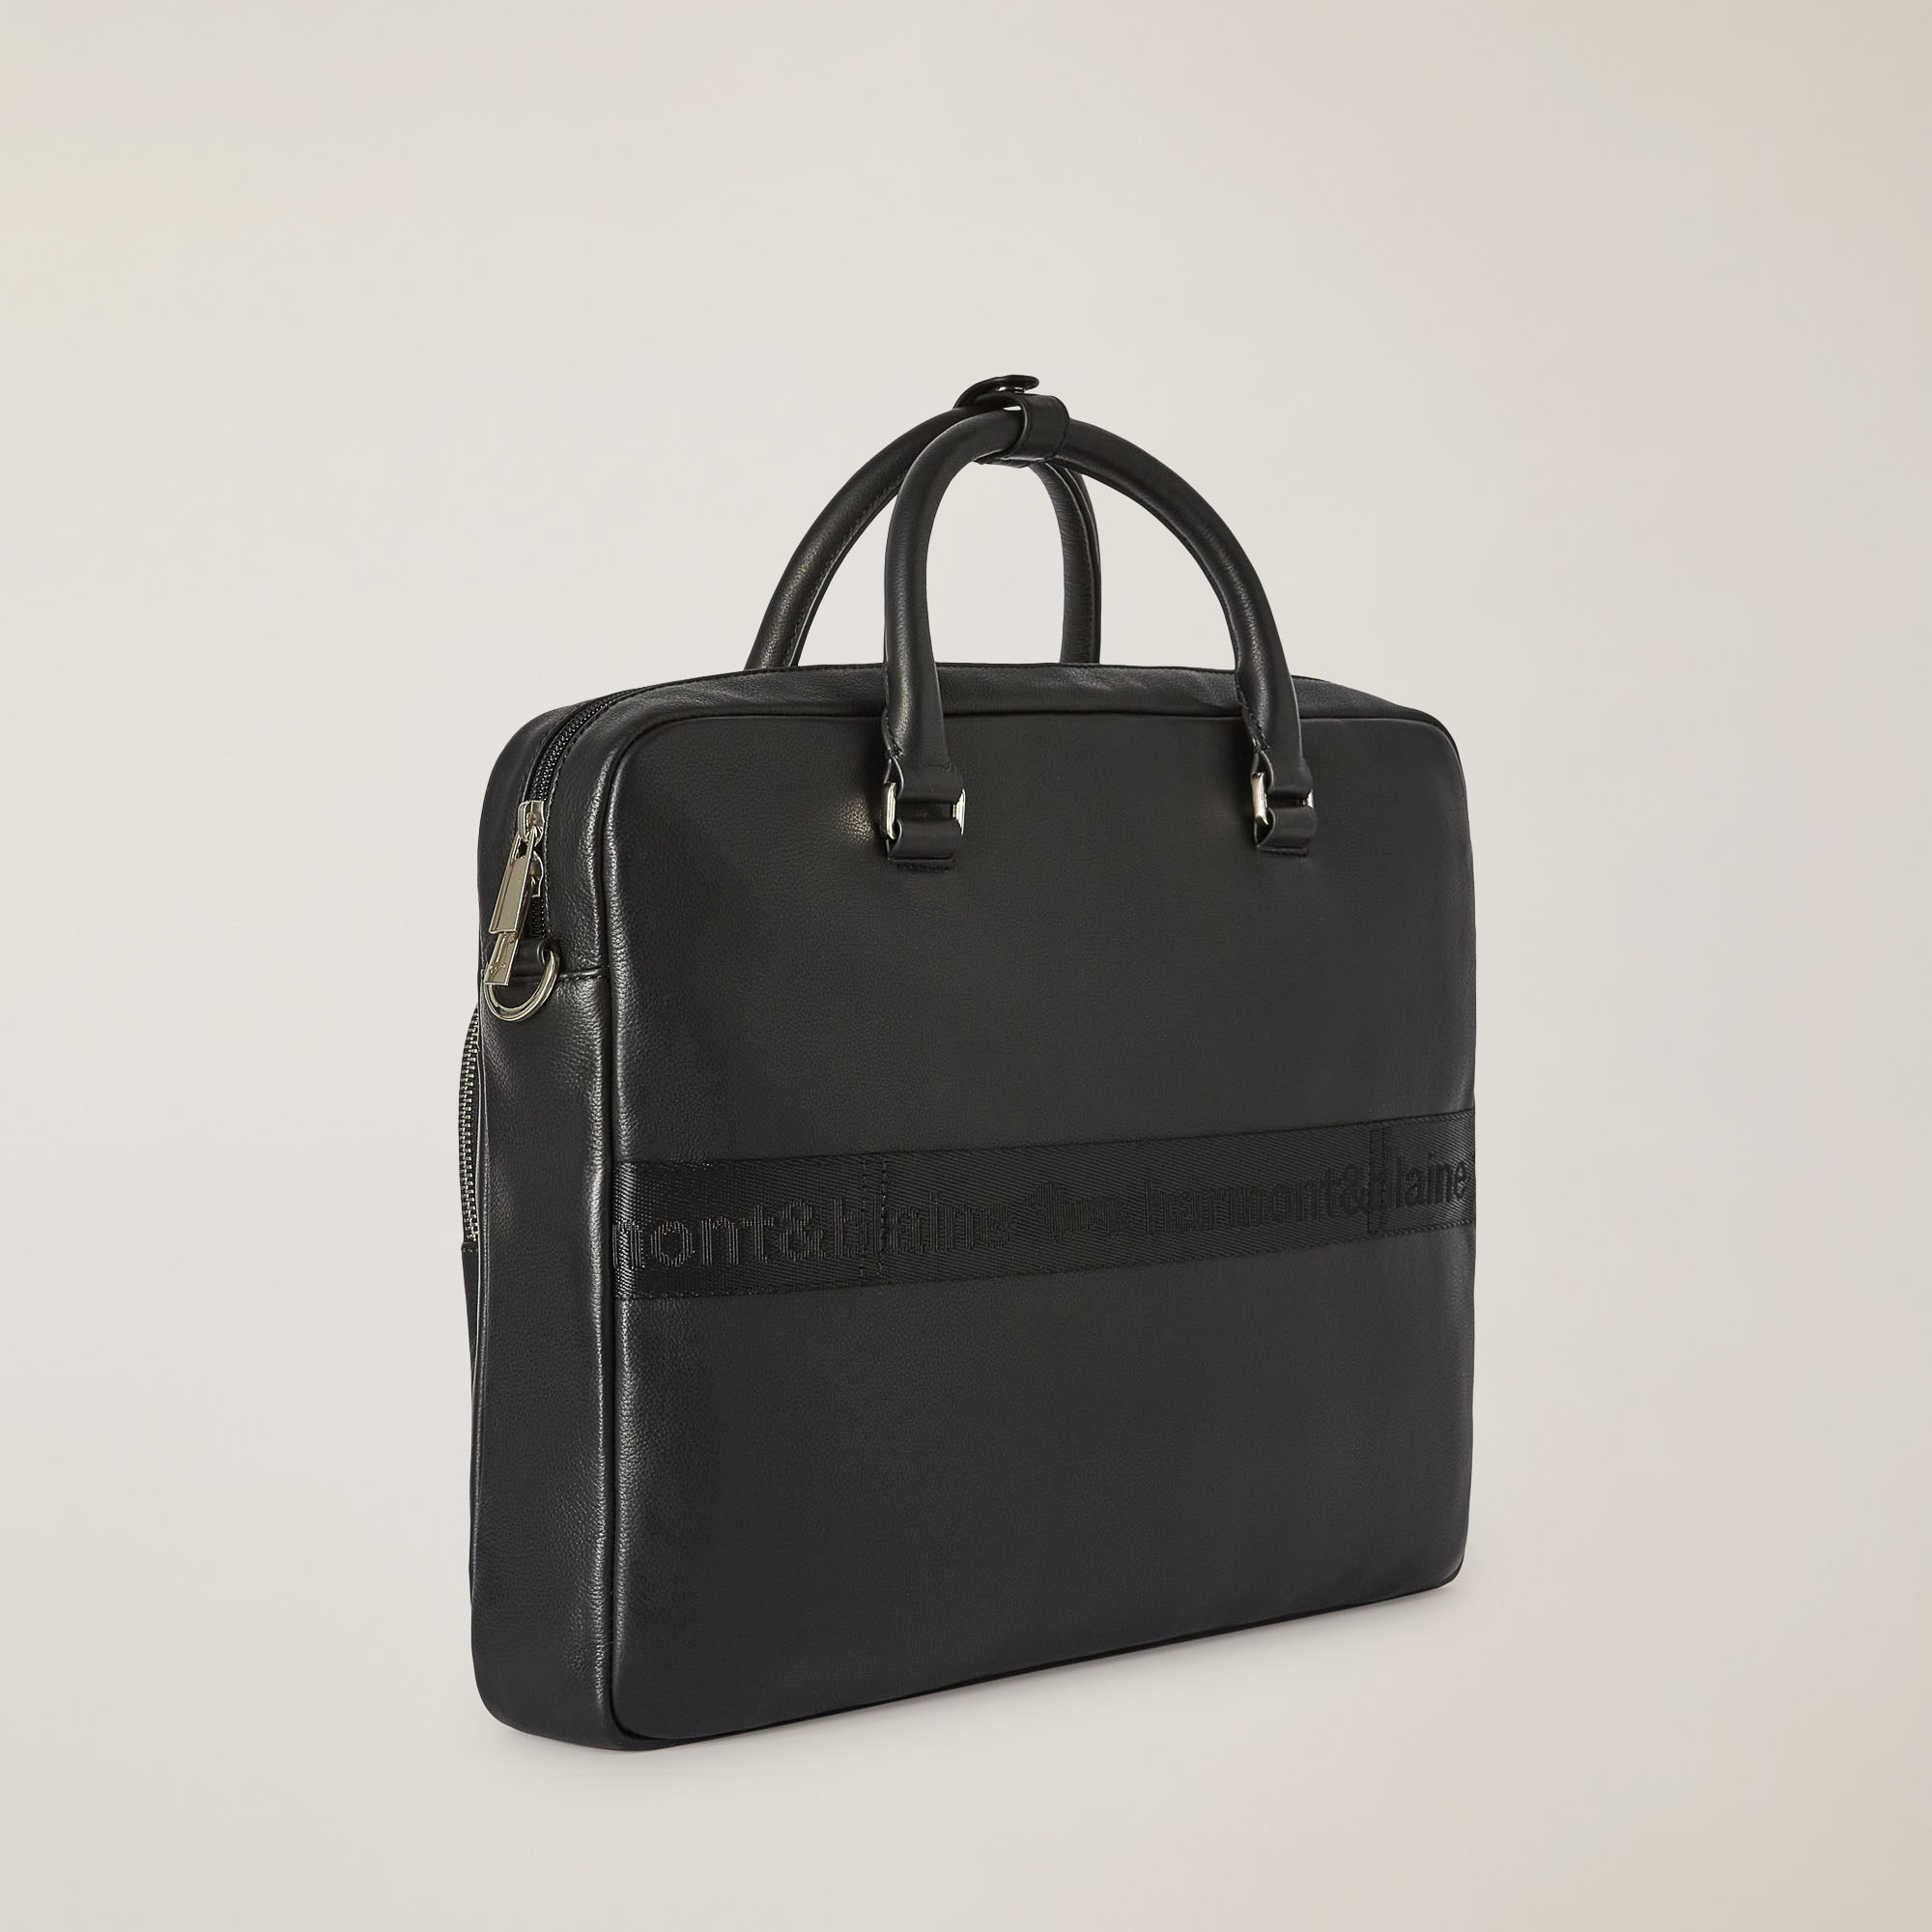 Business Bag In Vera Pelle Con Tracolla Rimovibile, Nero, large image number 1